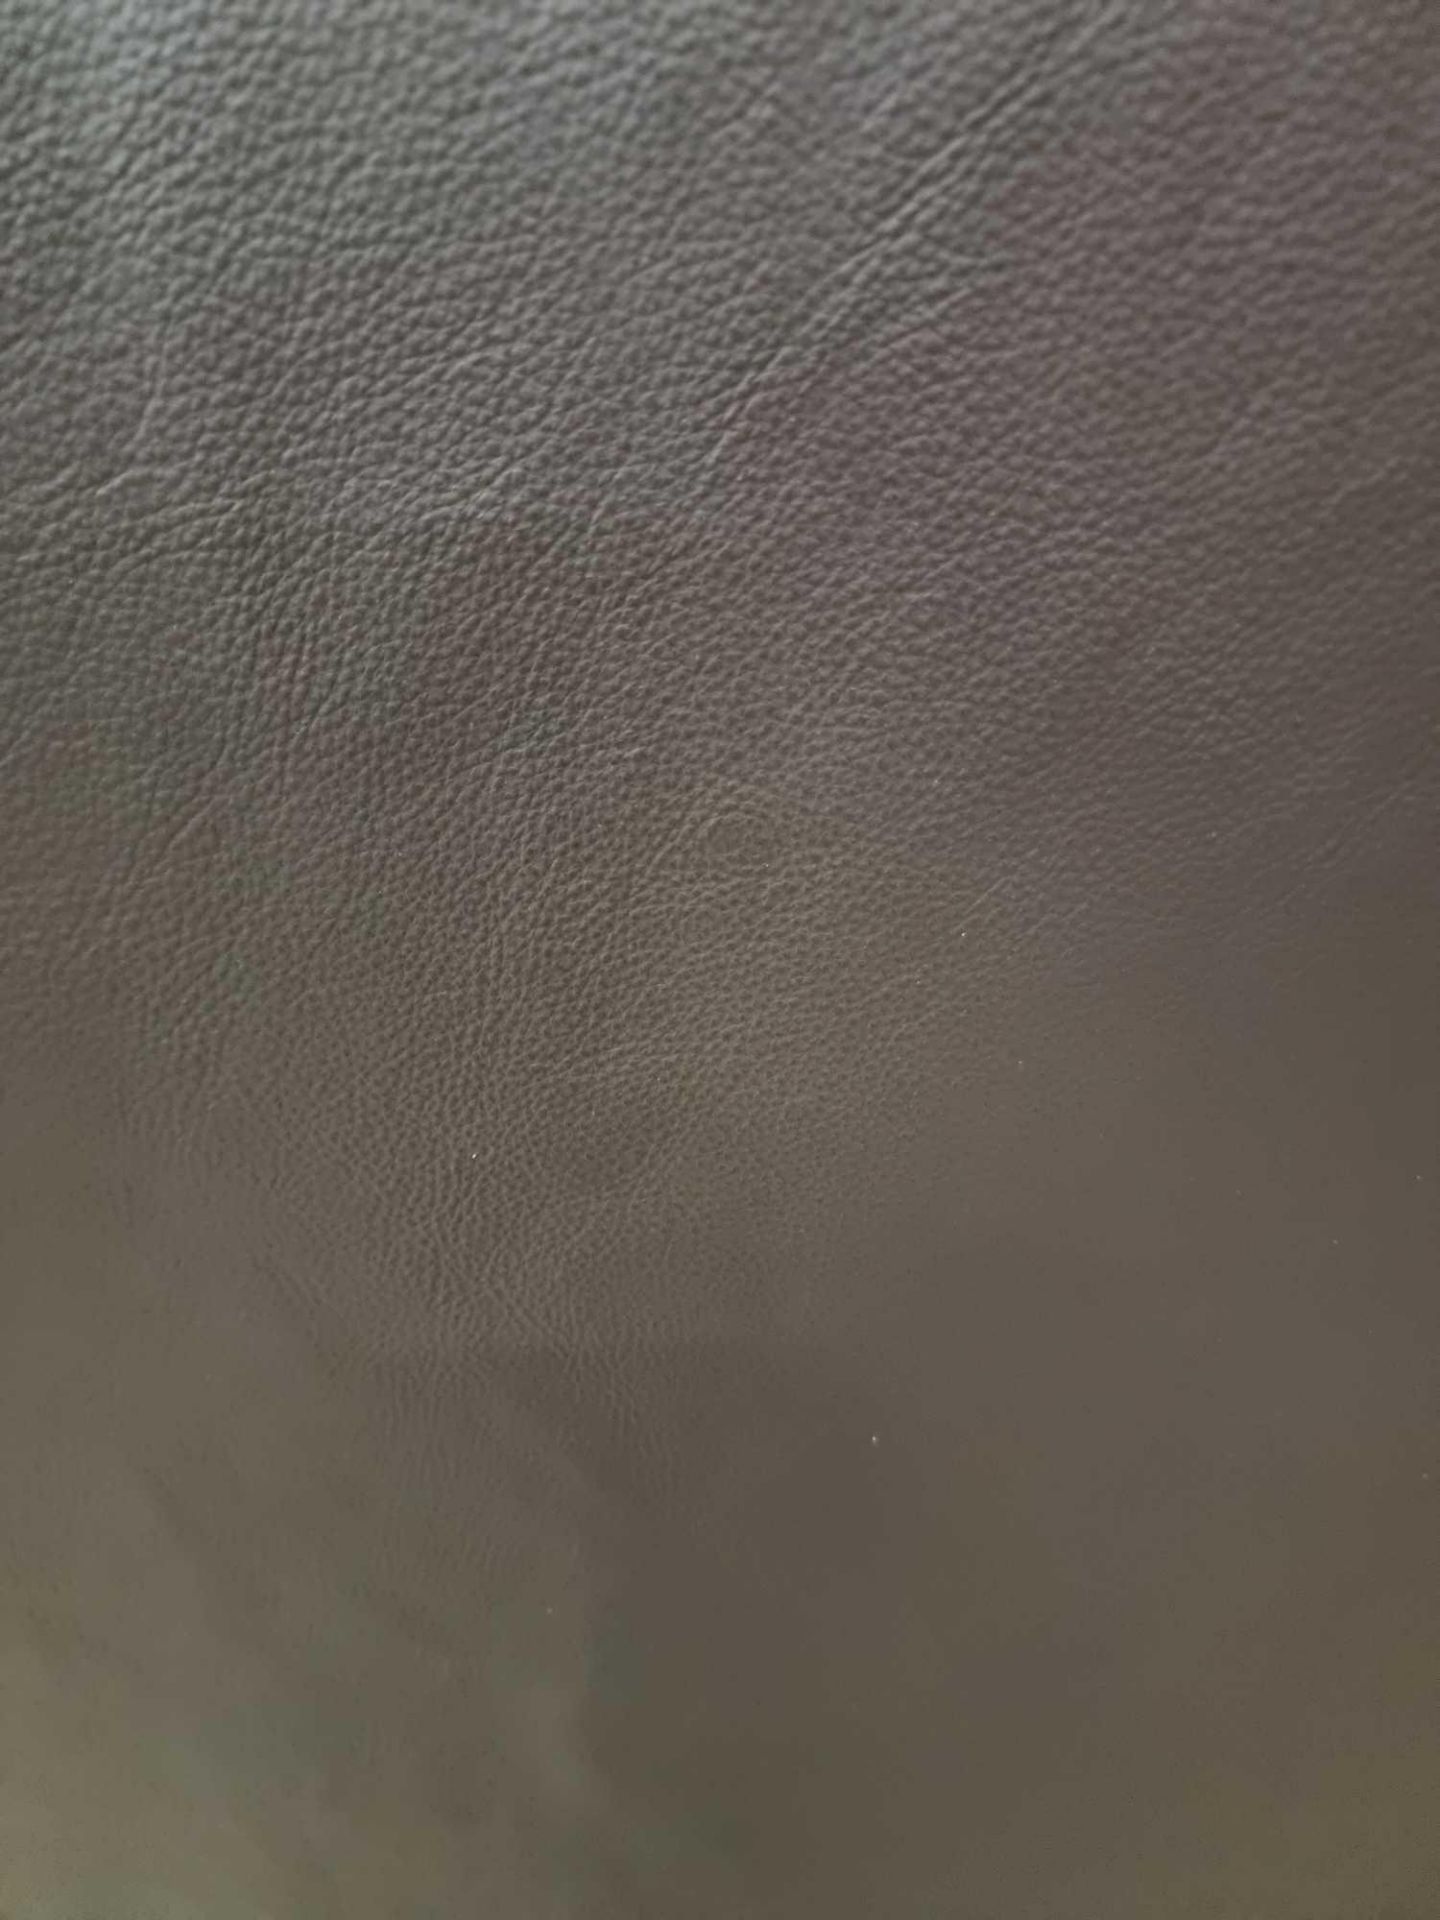 Yarwood Hammersmith Chocolate Leather Hide approximately 3 84M2 2 4 x 1 6cm ( Hide No,85) - Bild 2 aus 2